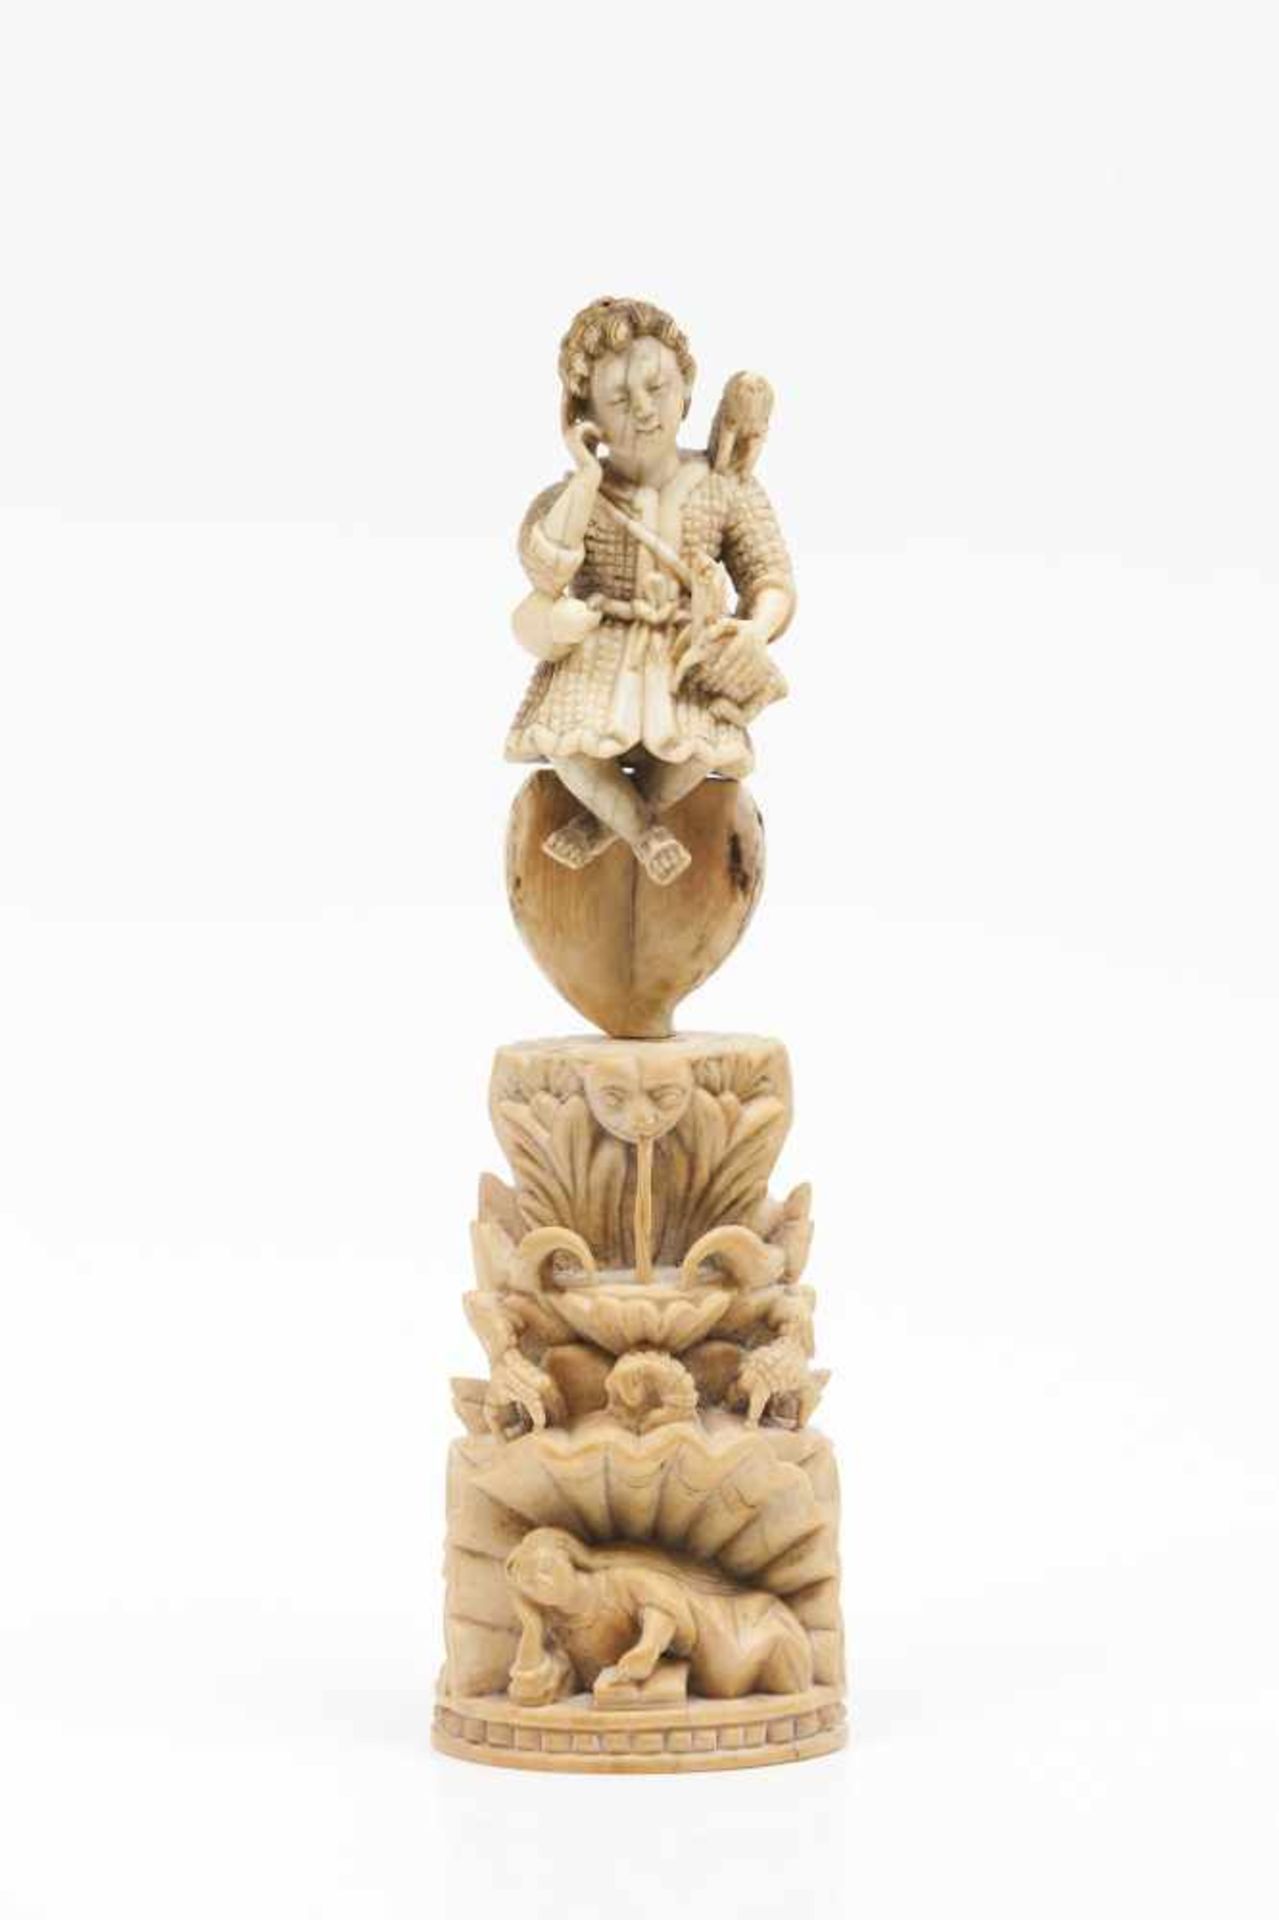 The Child Jesus Good ShepherdIndo-Portuguese ivory sculptureDepicting a sleeping Child Jesu